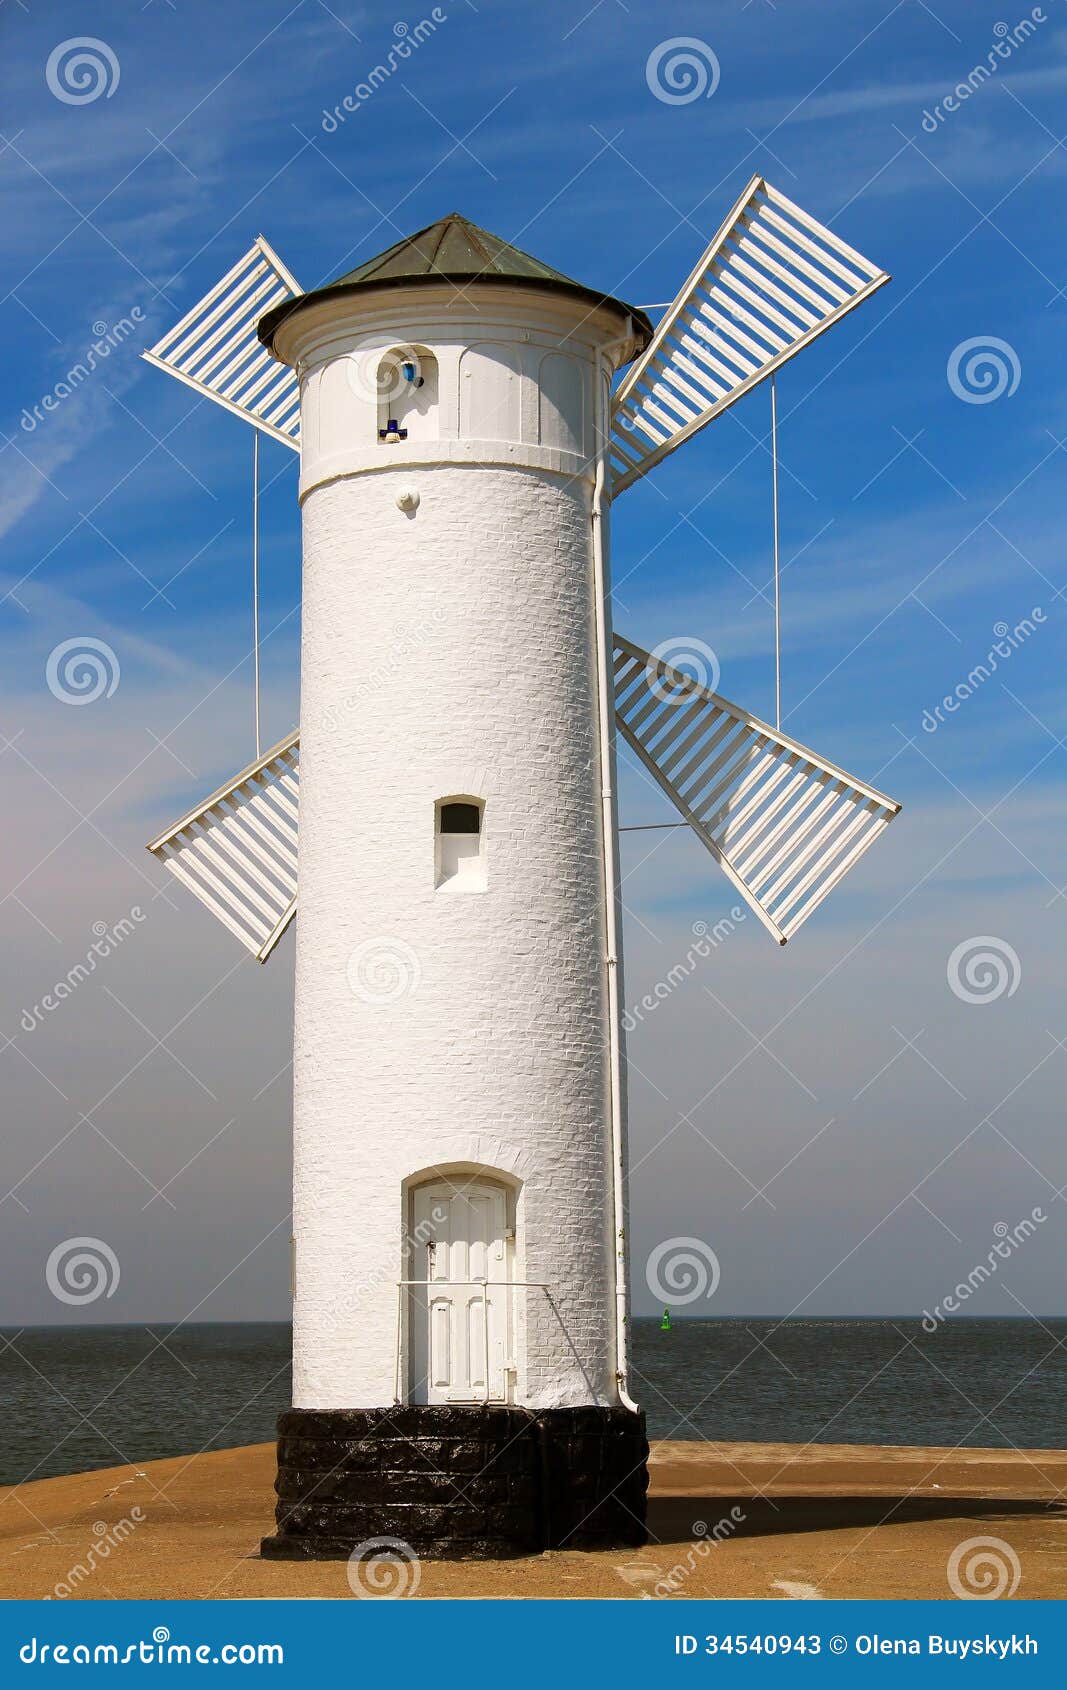 lighthouse windmill in swinoujscie, poland